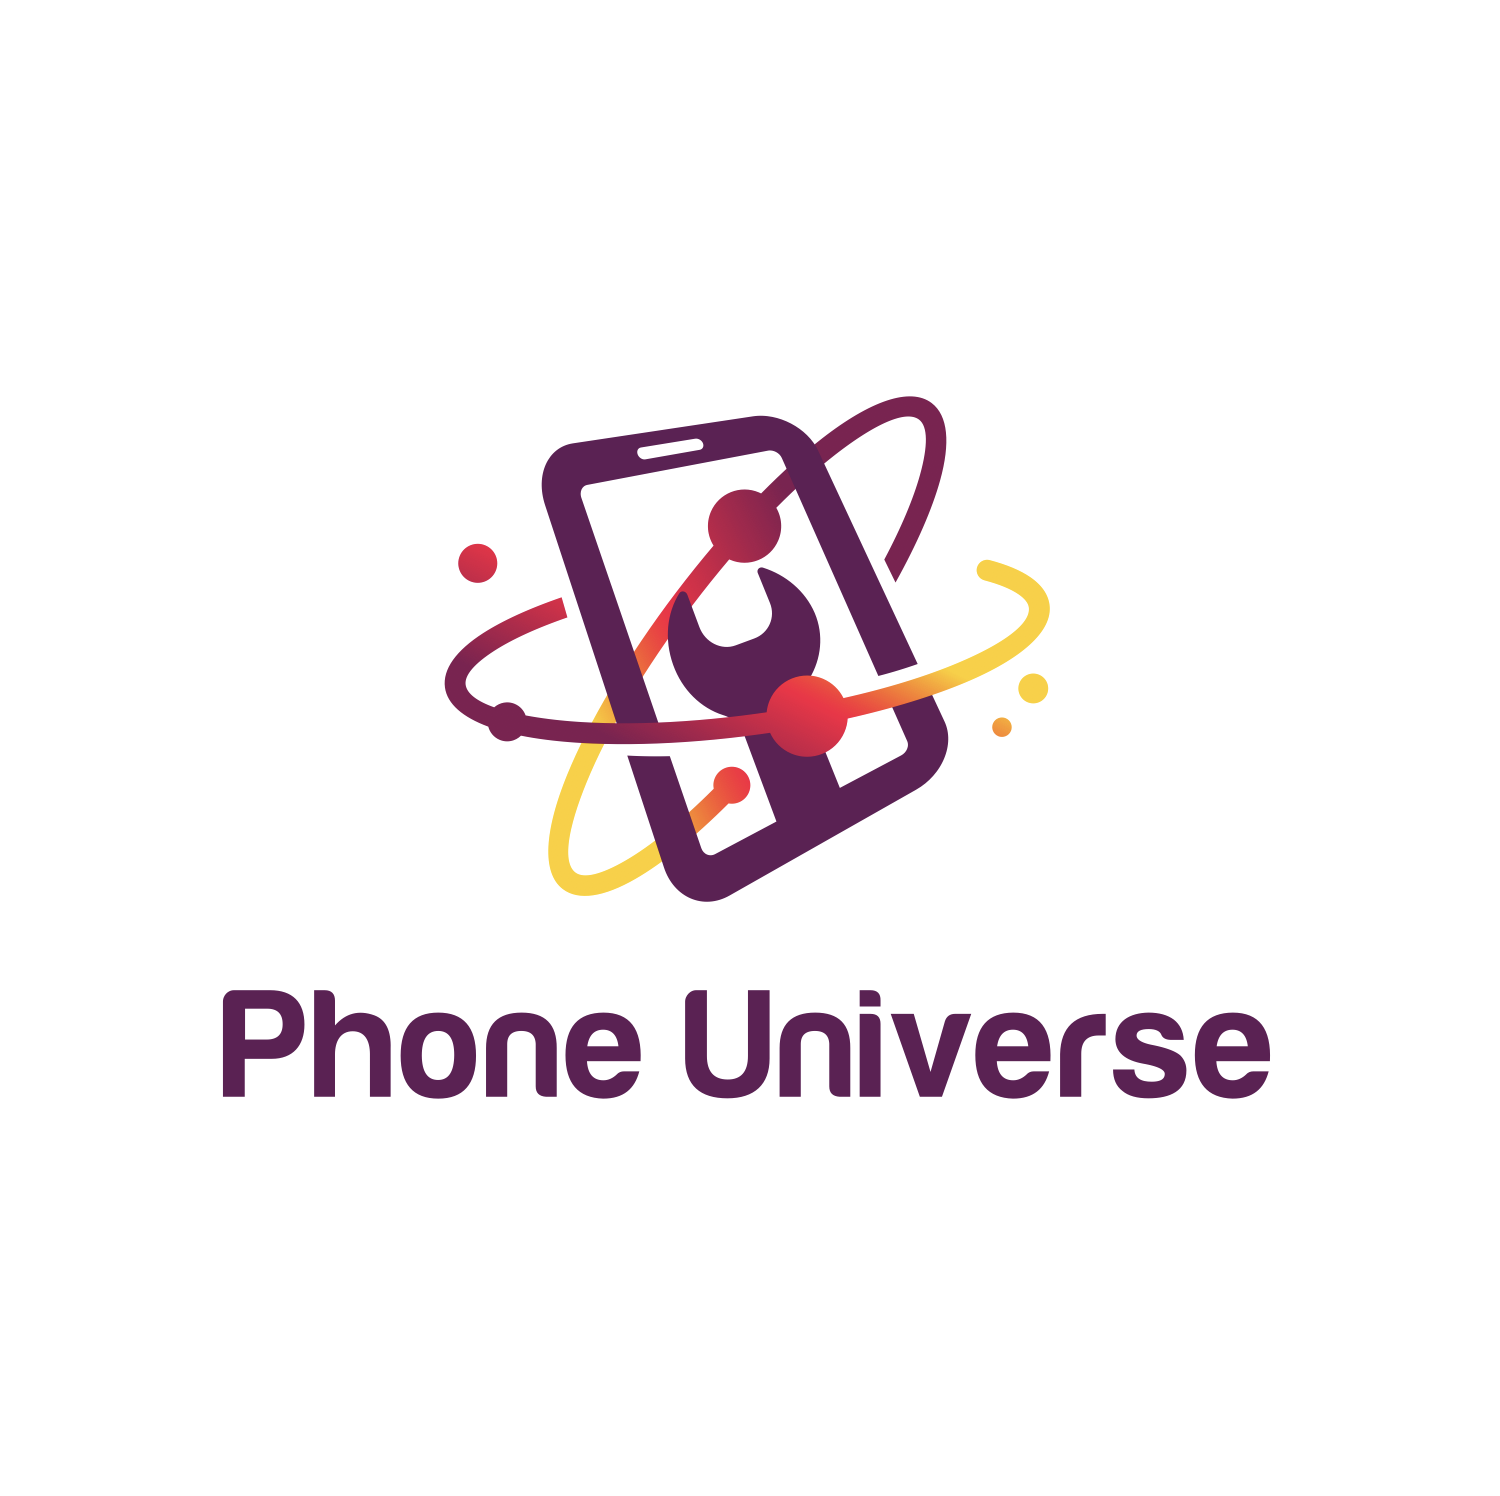 Phone Universe